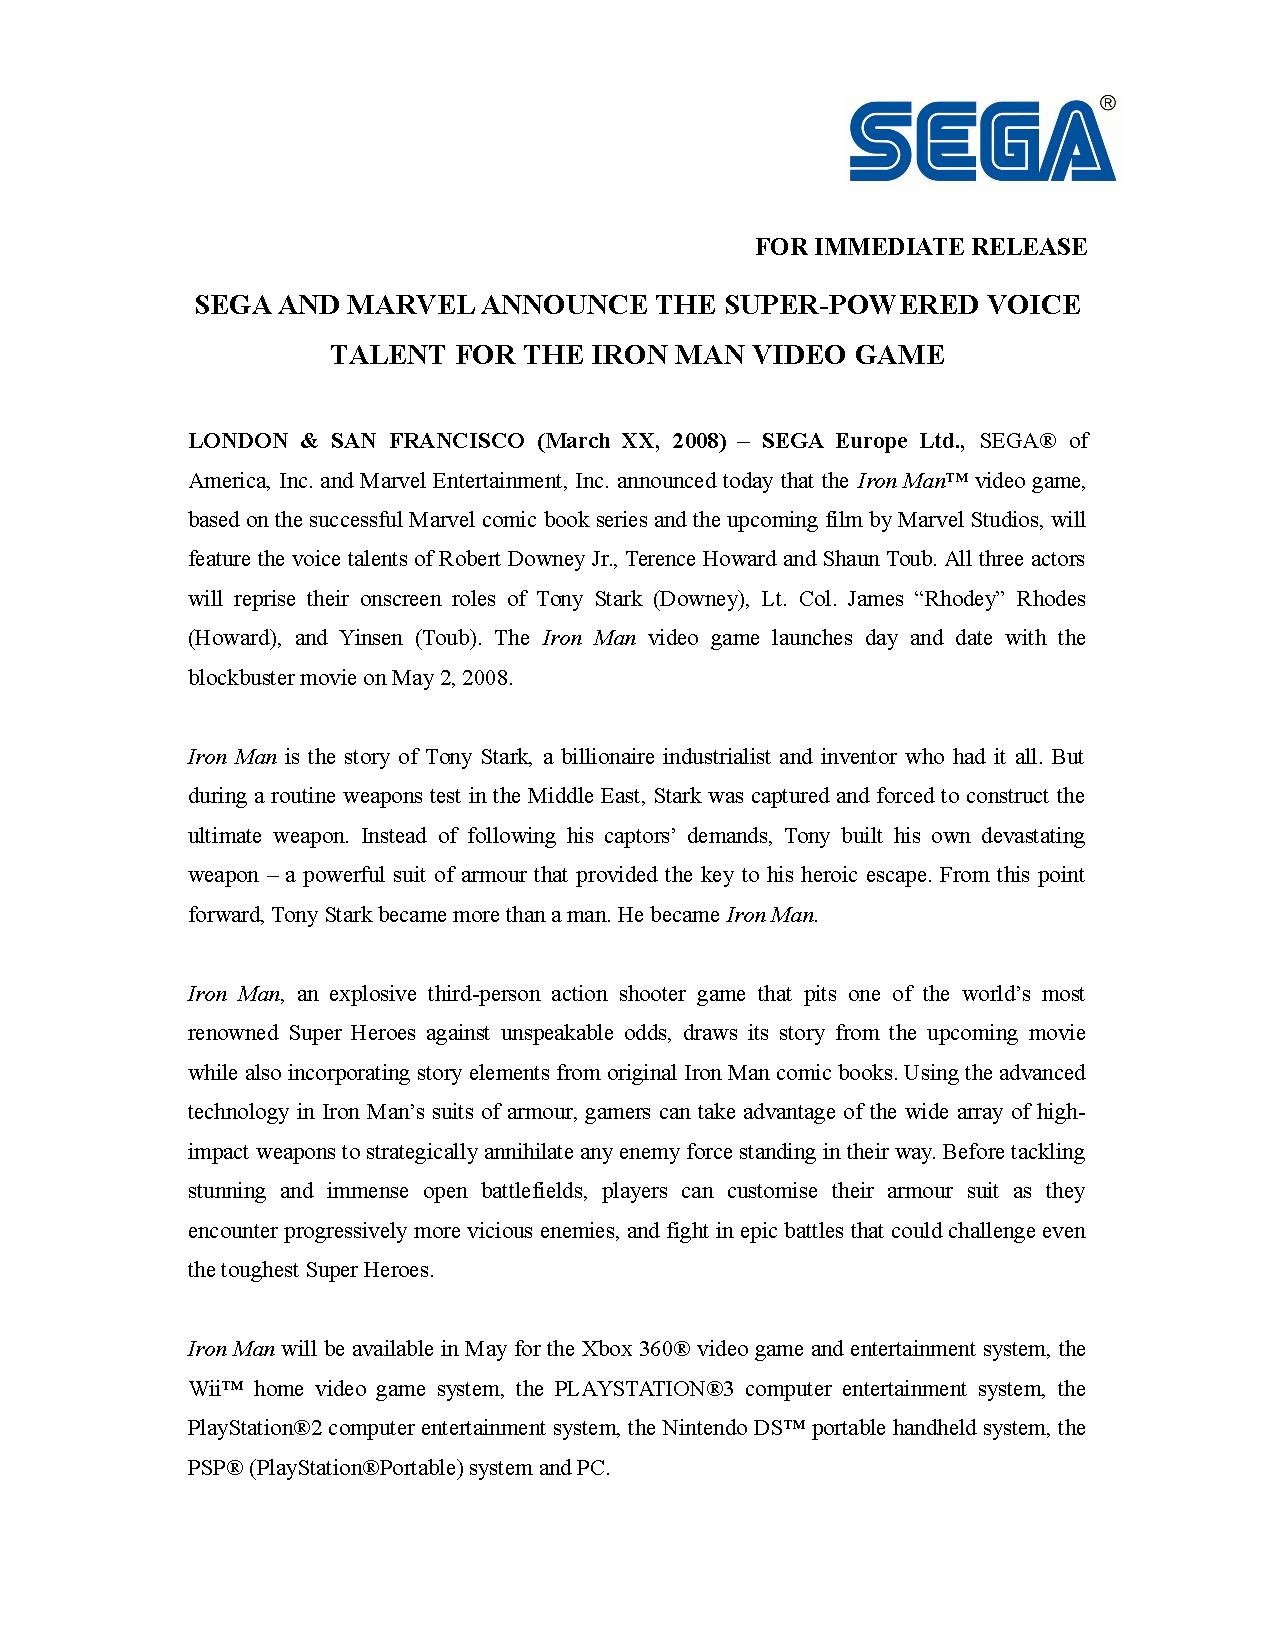 IronMan actor press release.pdf